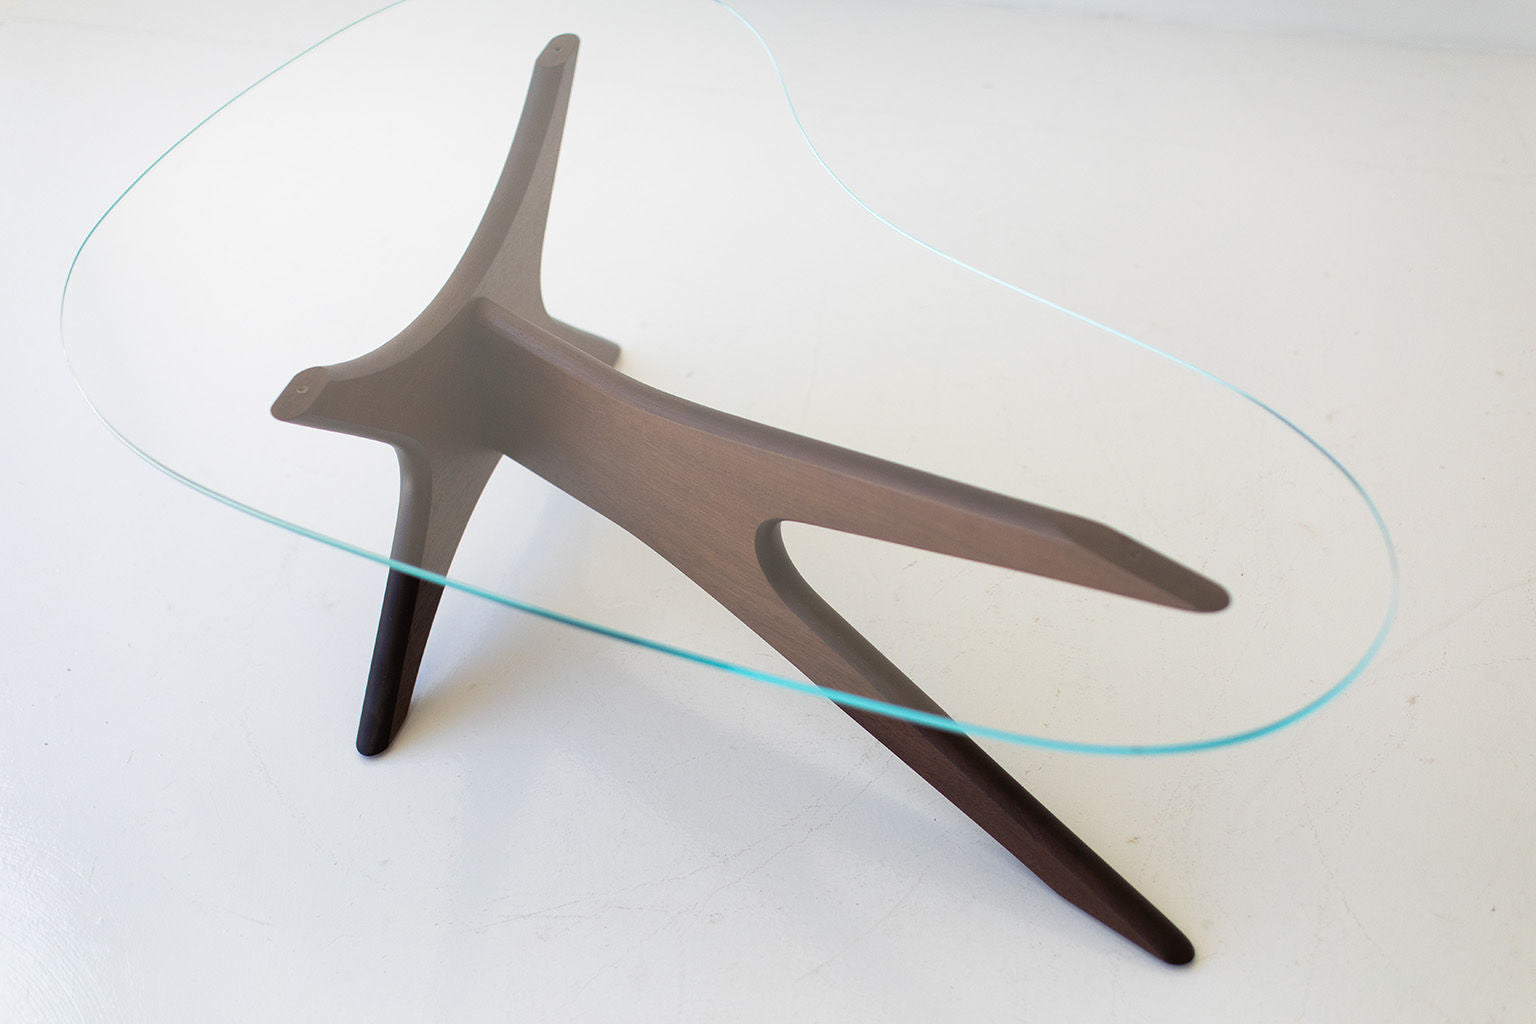 Craft Modern Glass Top Coffee Table - 2010